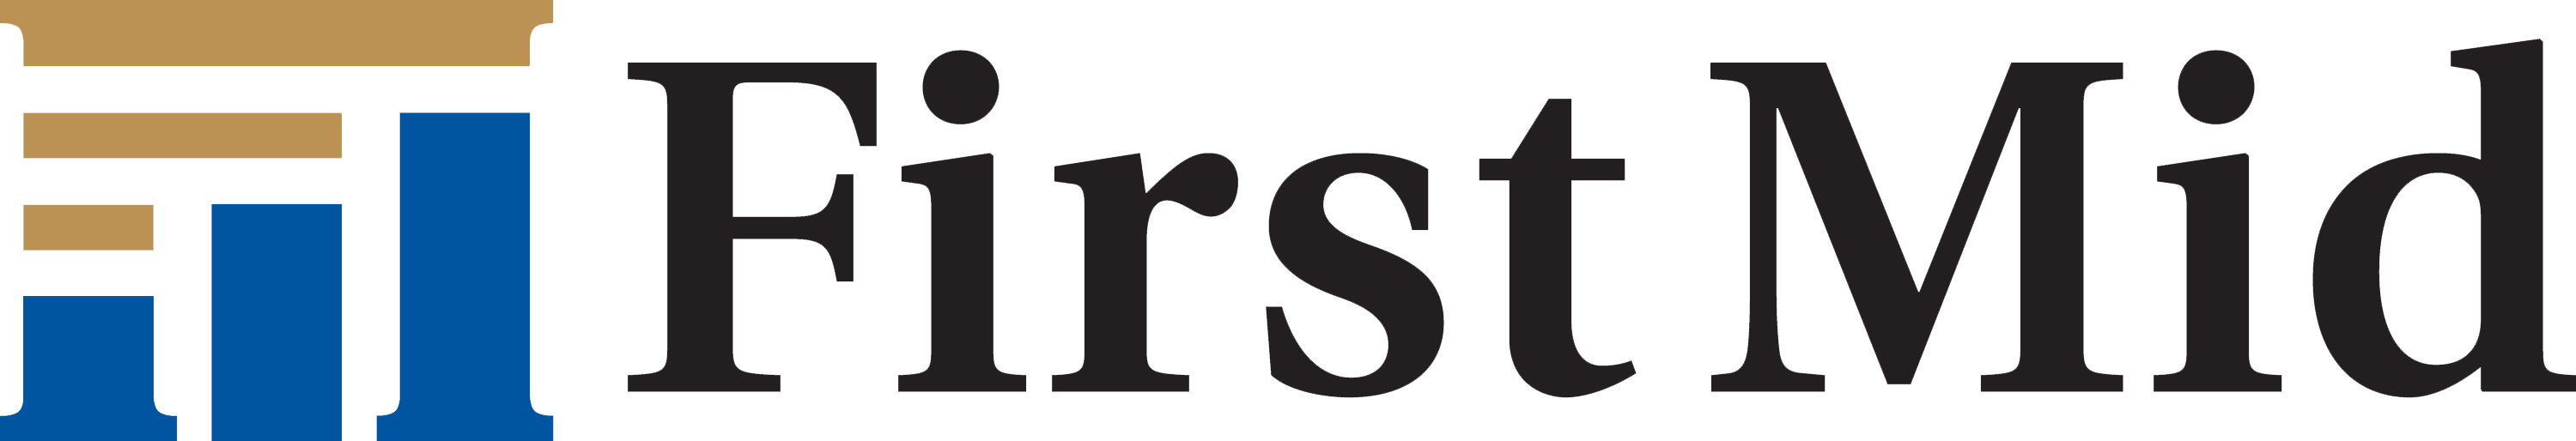 first mid logo - 2018 transparent